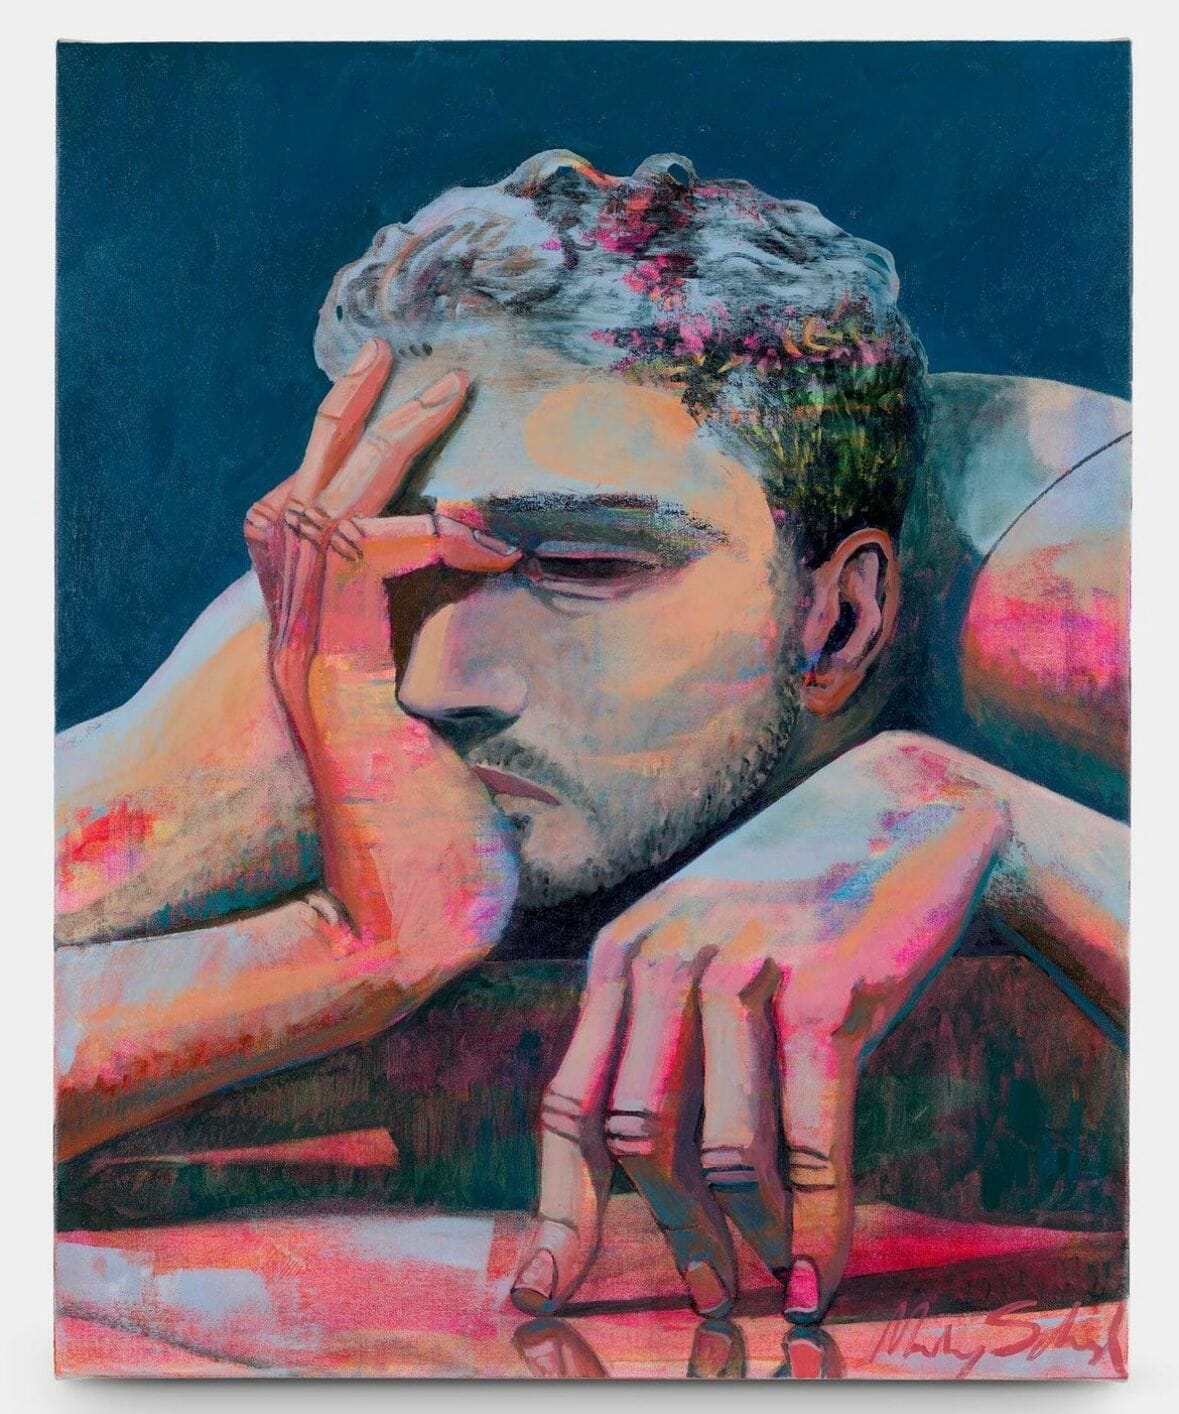 Marty Schnapf, “The Regular (hiraeth)”, oil on canvas, 76 x 61 cm, 30 x 24 in.